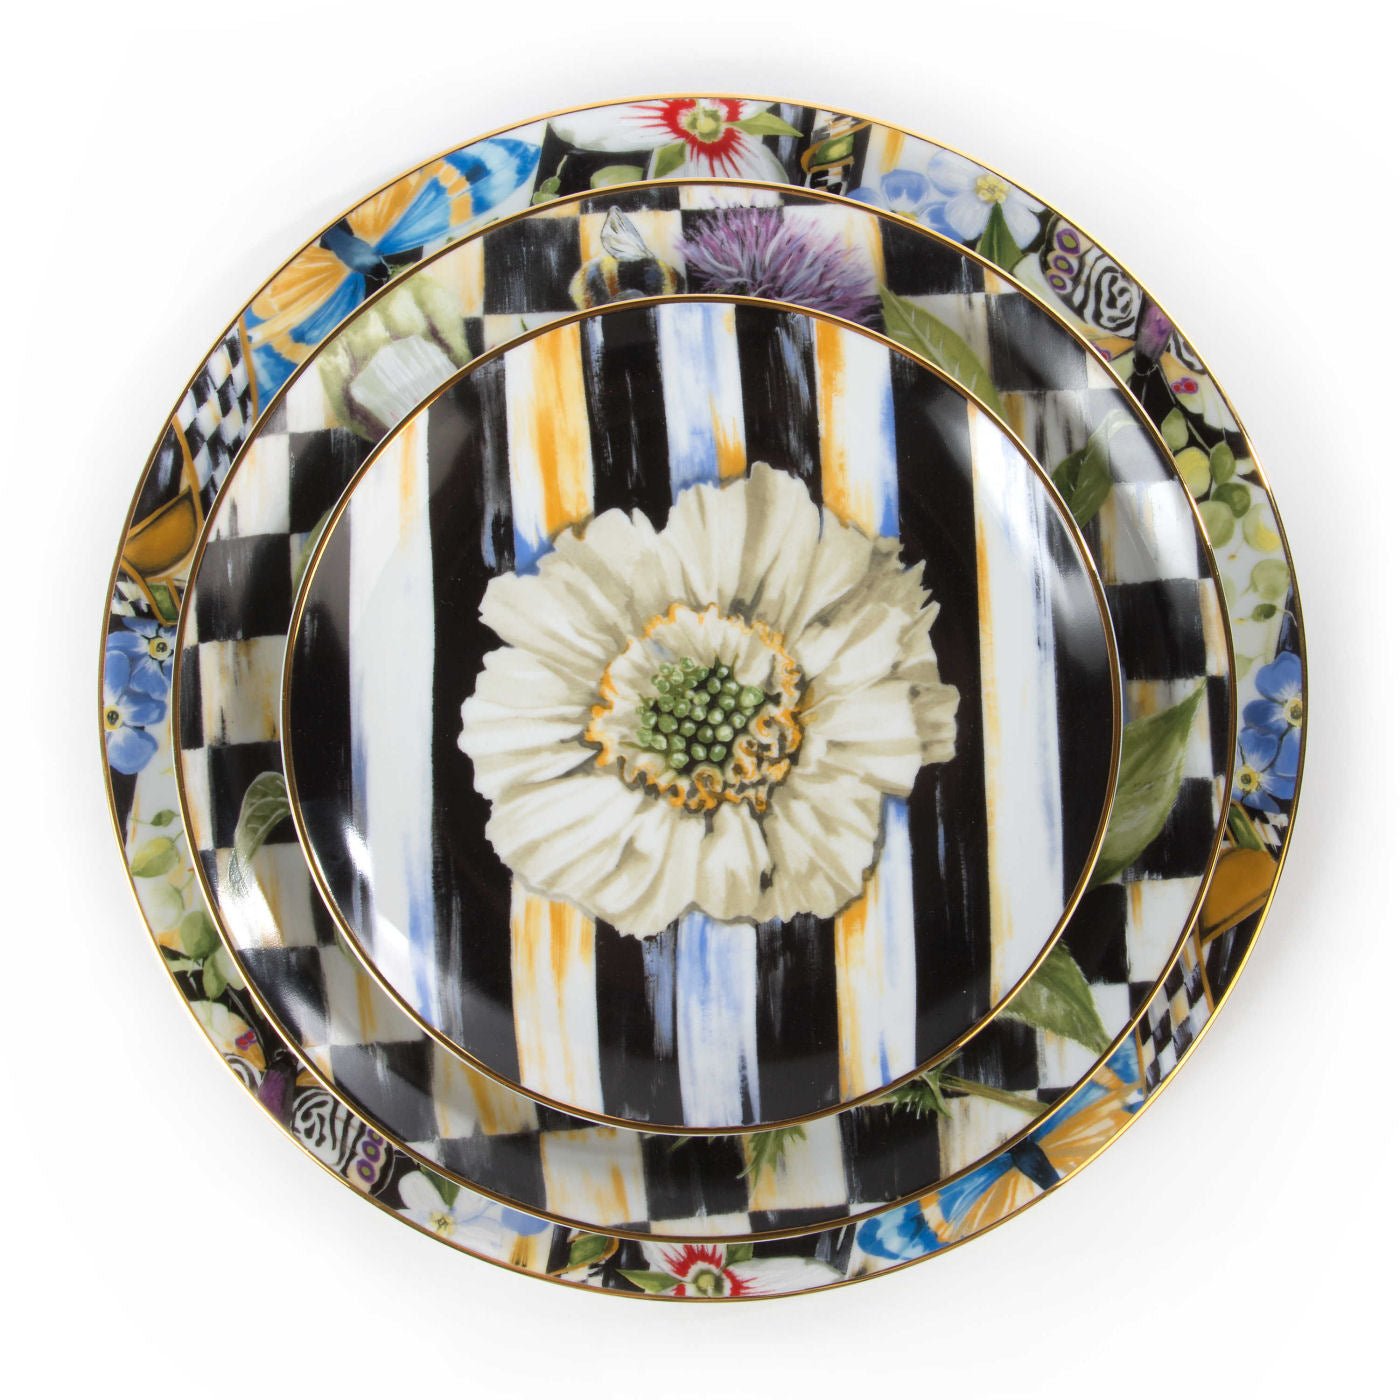 Thistle & Bee Salad Plate - The Bride - |VESIMI Design|